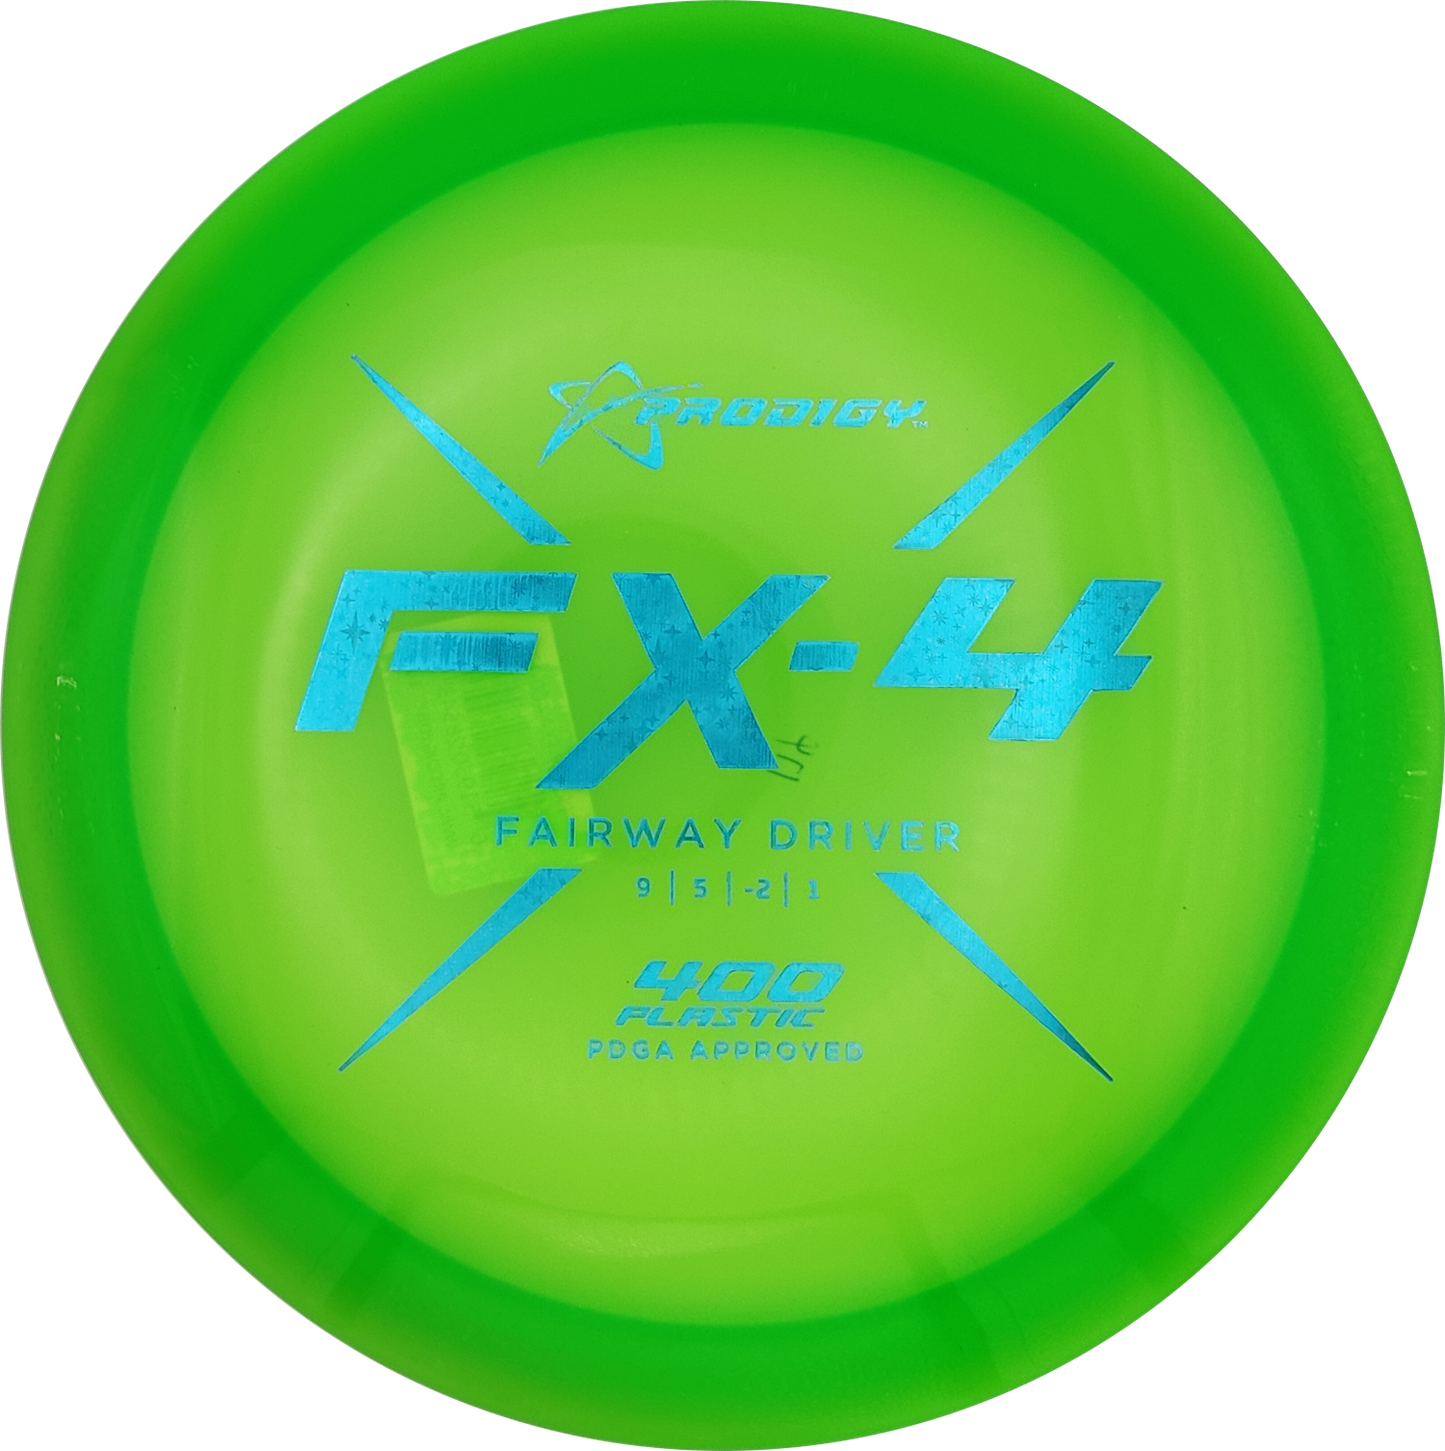 Prodigy FX-4 400